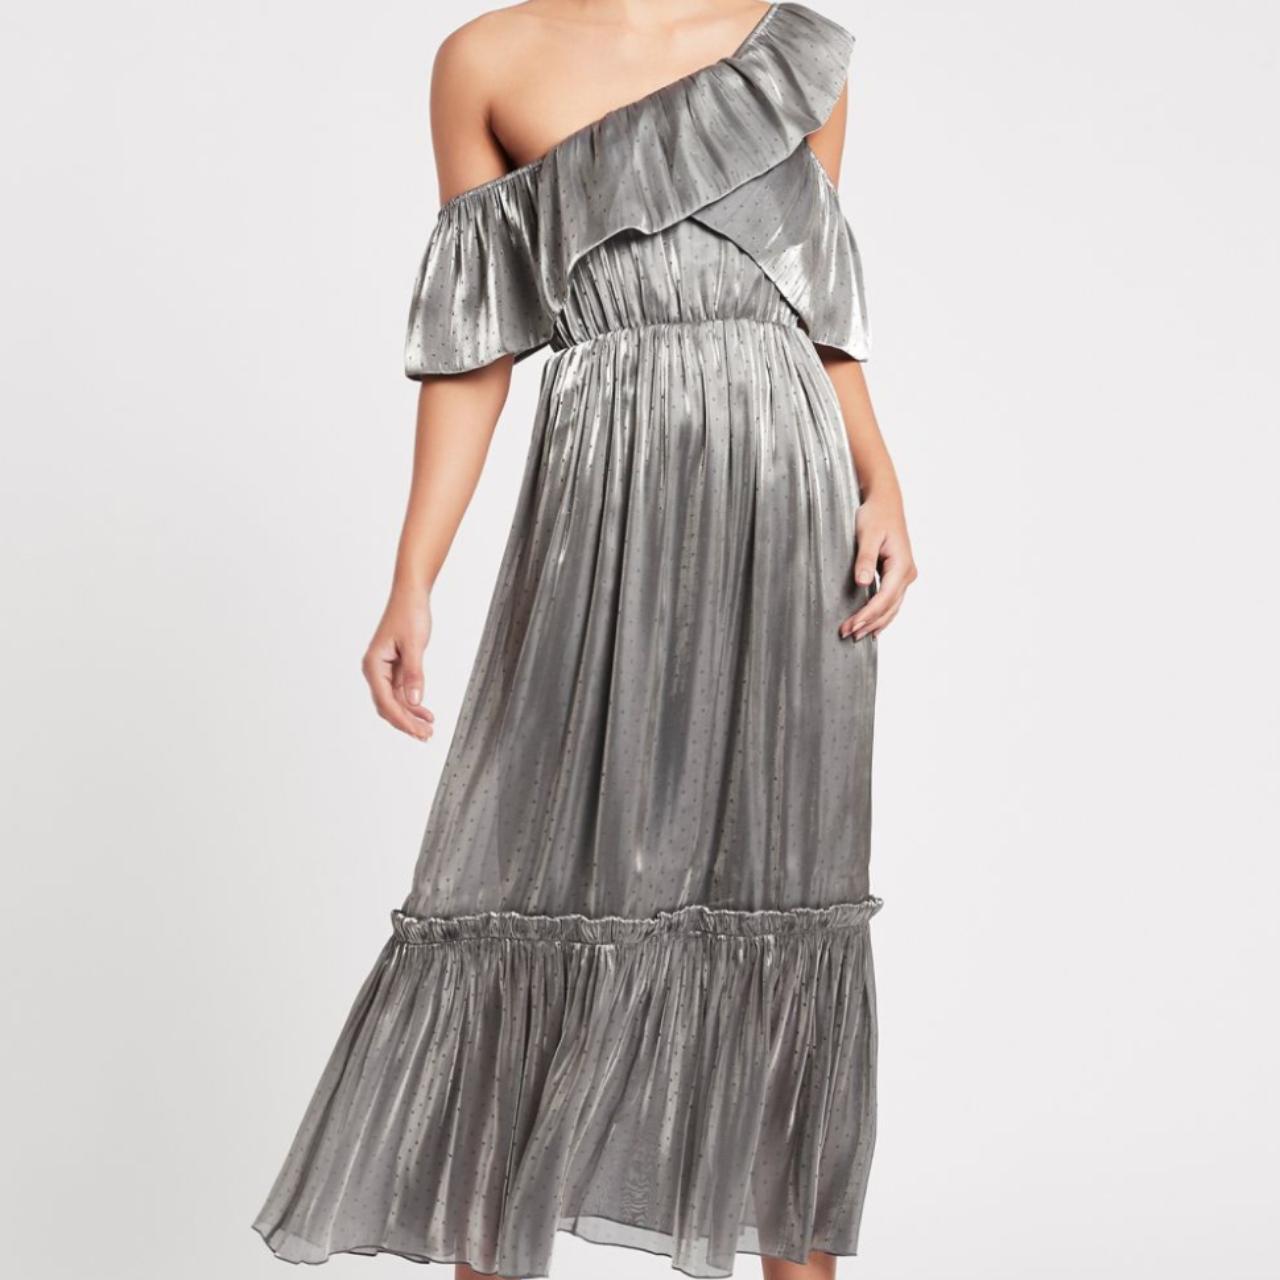 Product Image 1 - Three Floor Moonstone Silver Dress
—
Fun